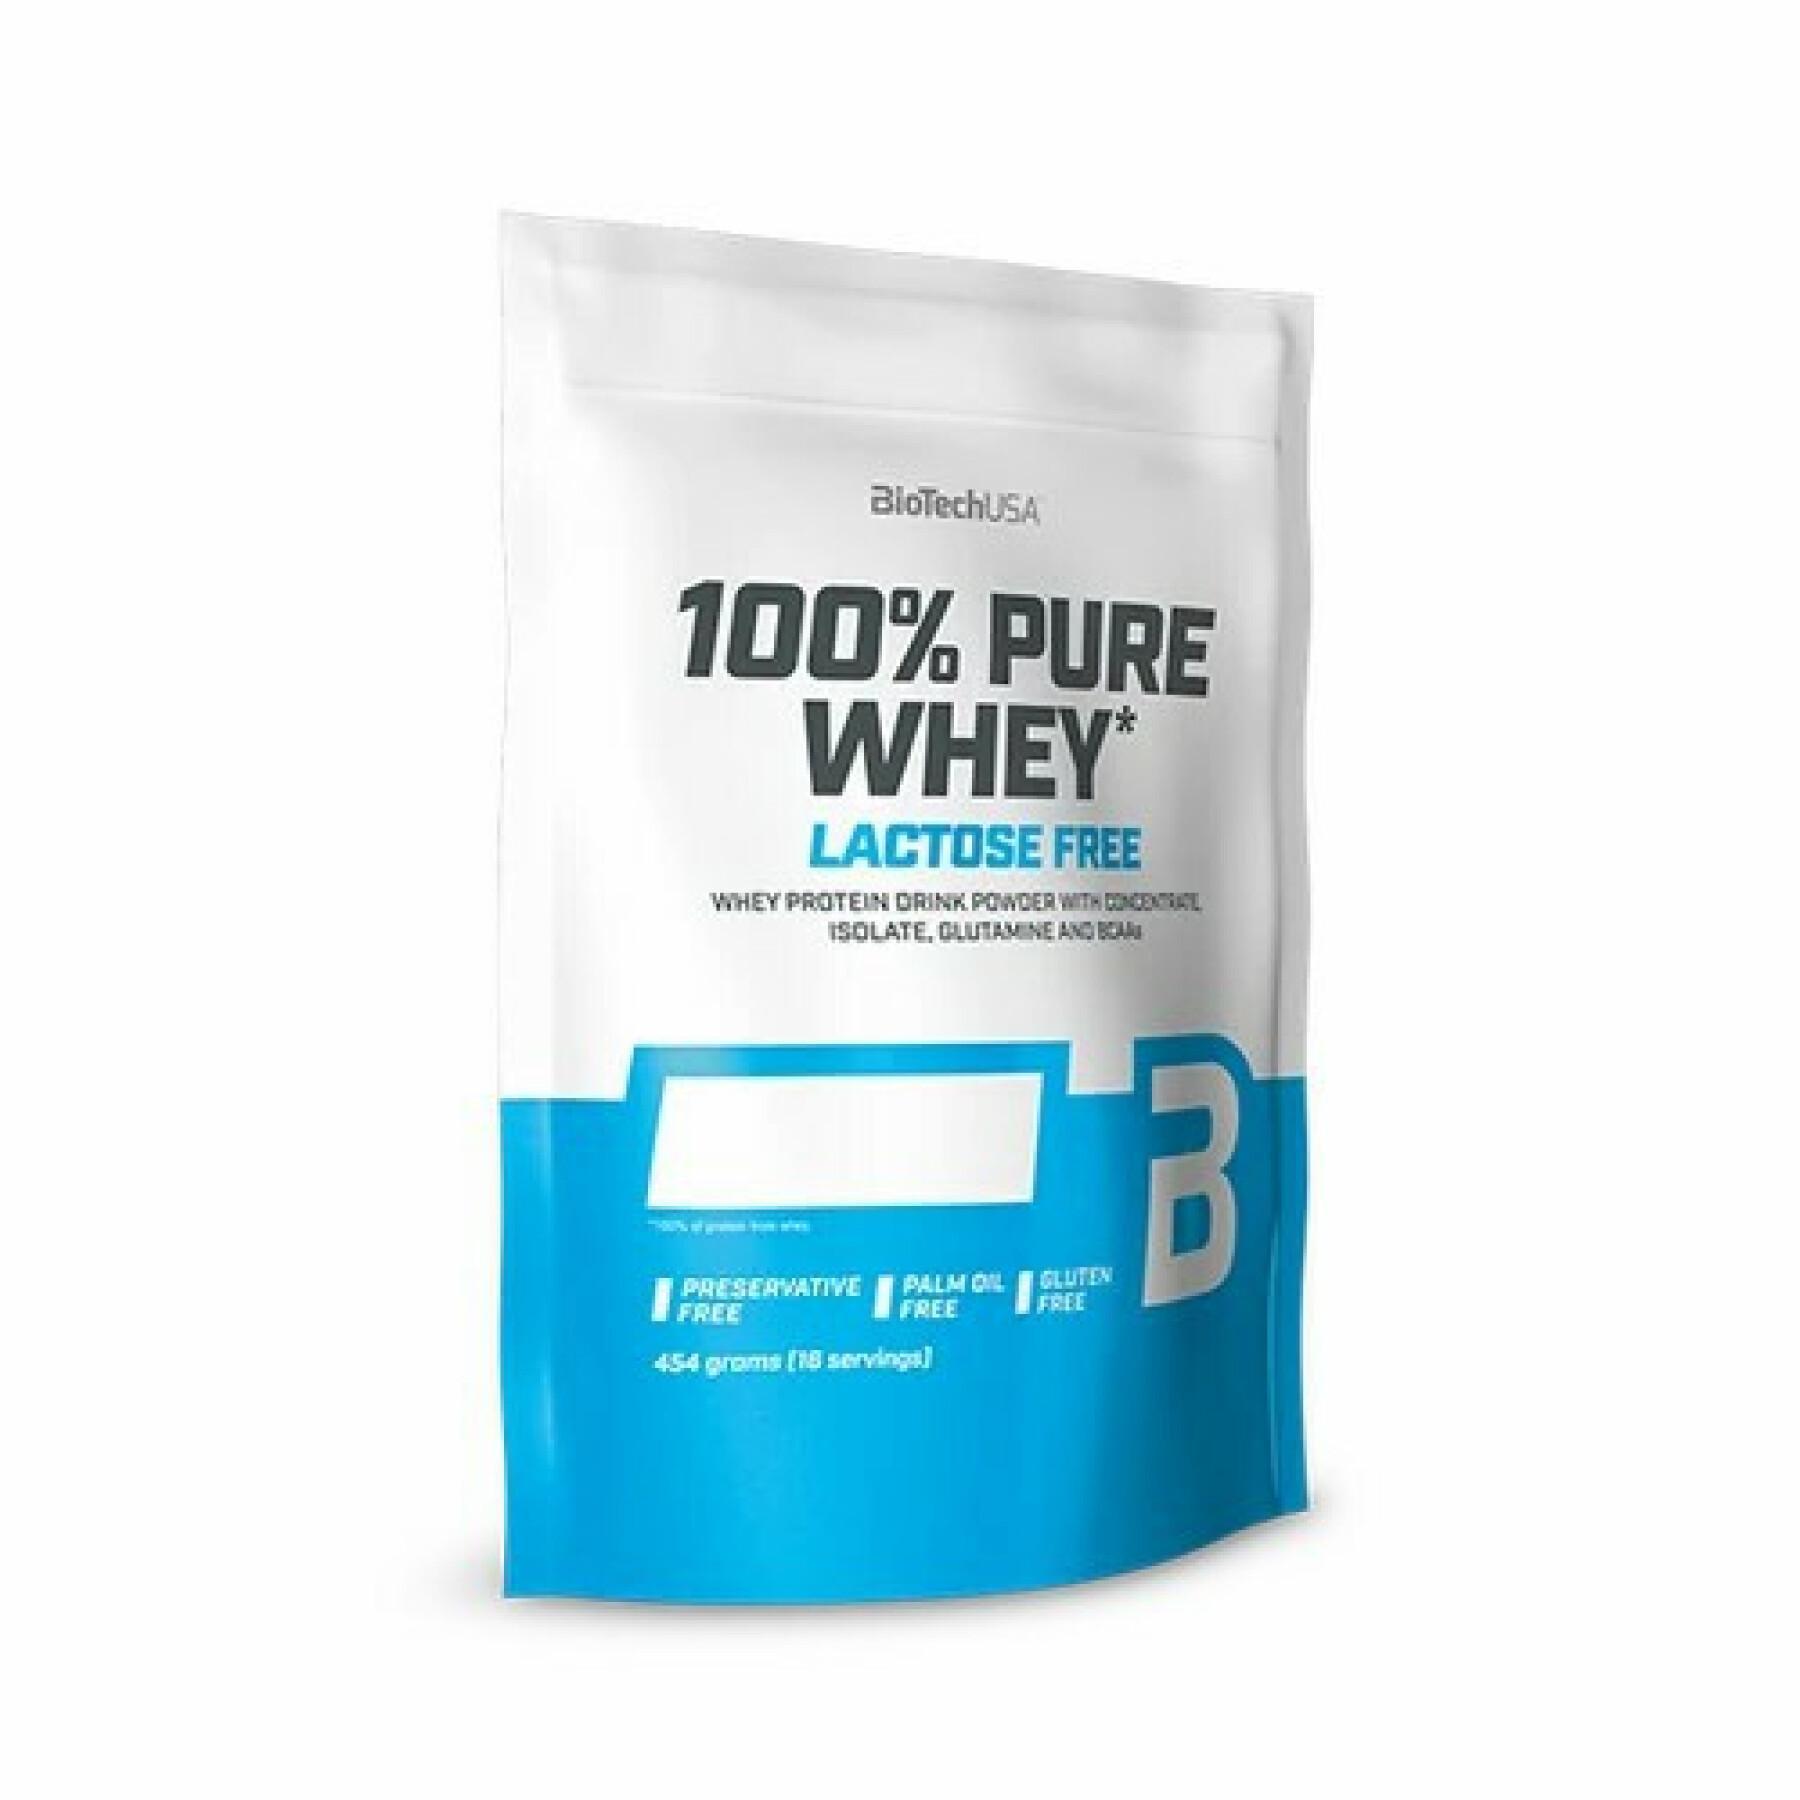 Pak van 10 zakjes proteïne Biotech USA 100% pure whey lactose free - Fraise - 454g